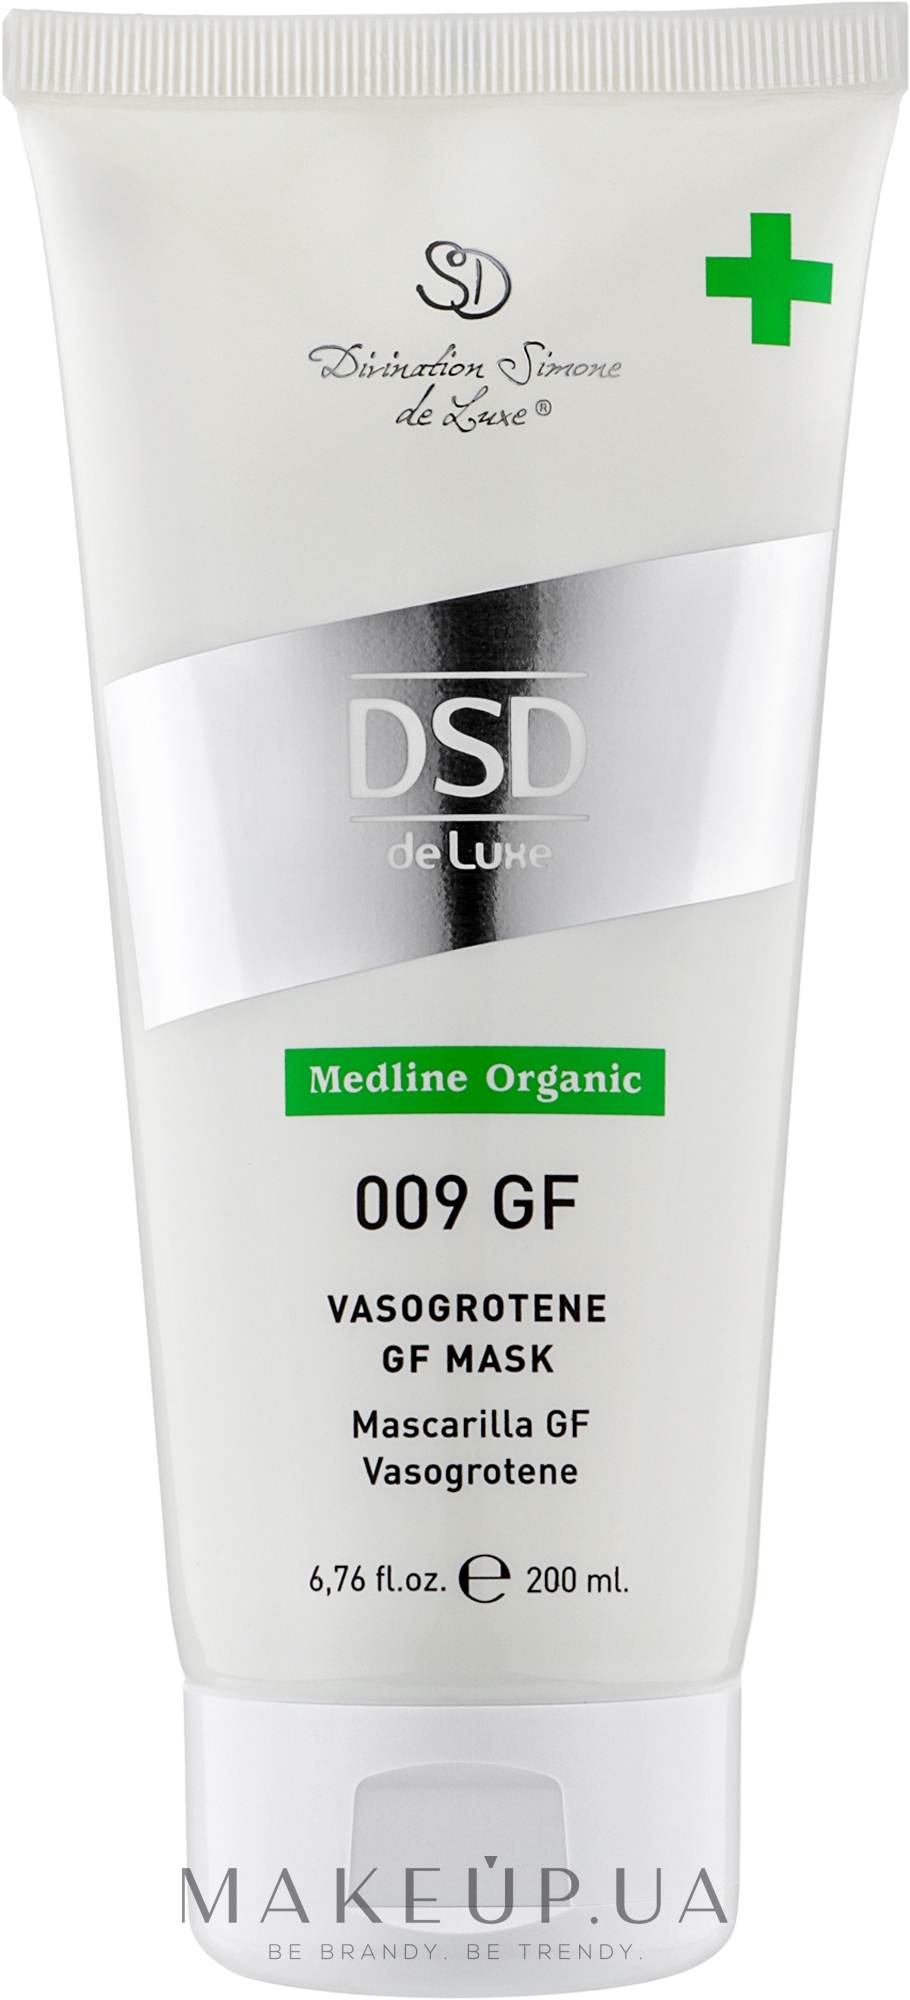 Маска "Вазогротен" з факторами росту № 009 - Simone DSD de Luxe Medline Organic Vasogrotene Gf Mask — фото 200ml